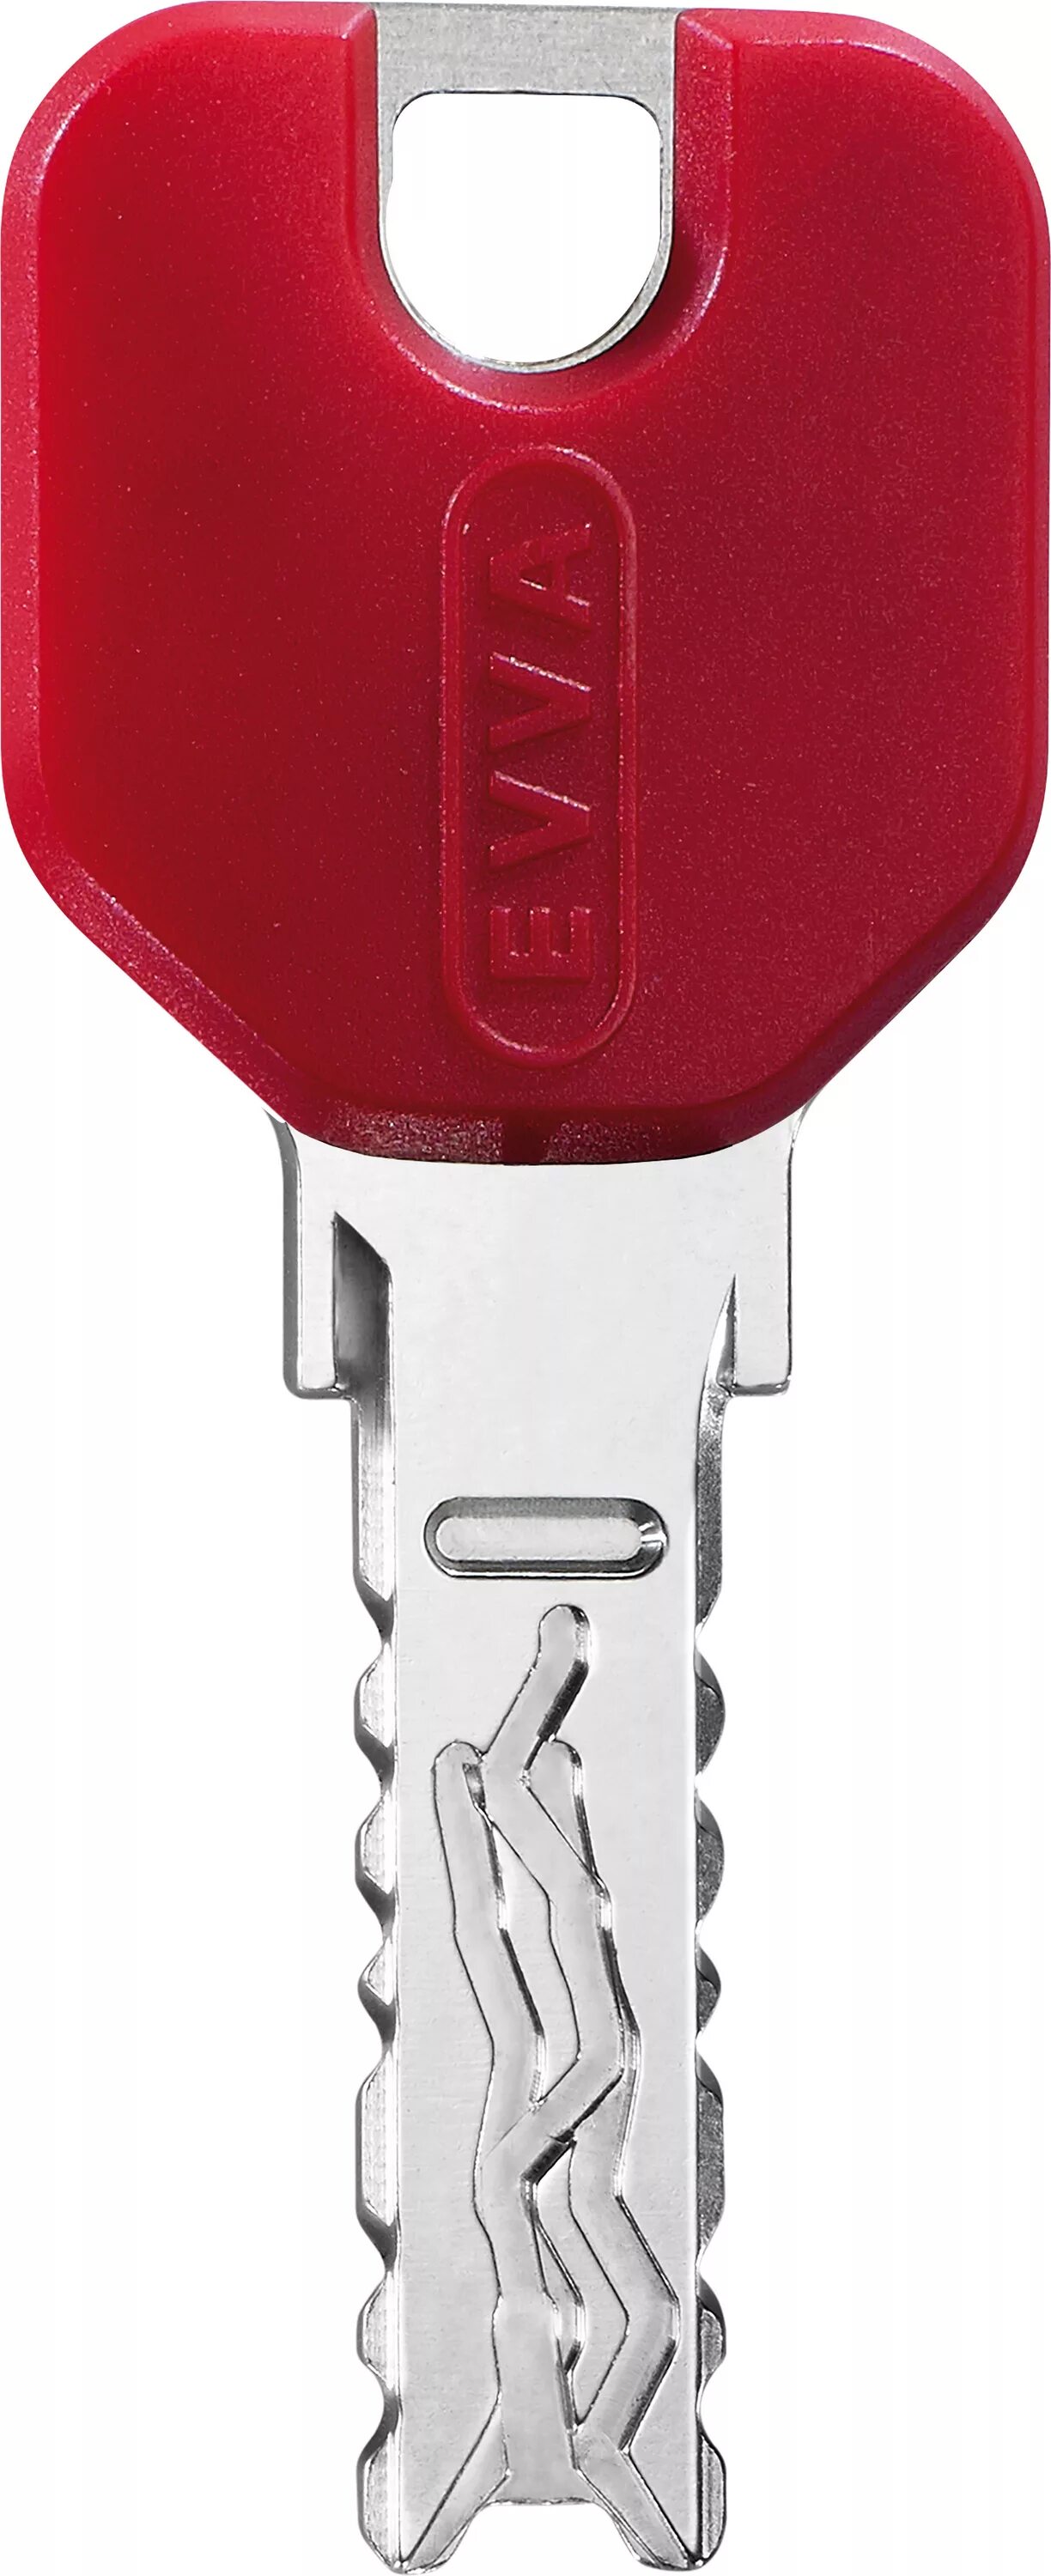 Evva 4ks. Ключ головка с пластиком. Пластиковая головка для ключа. Пластмассовая накладка для ключа.